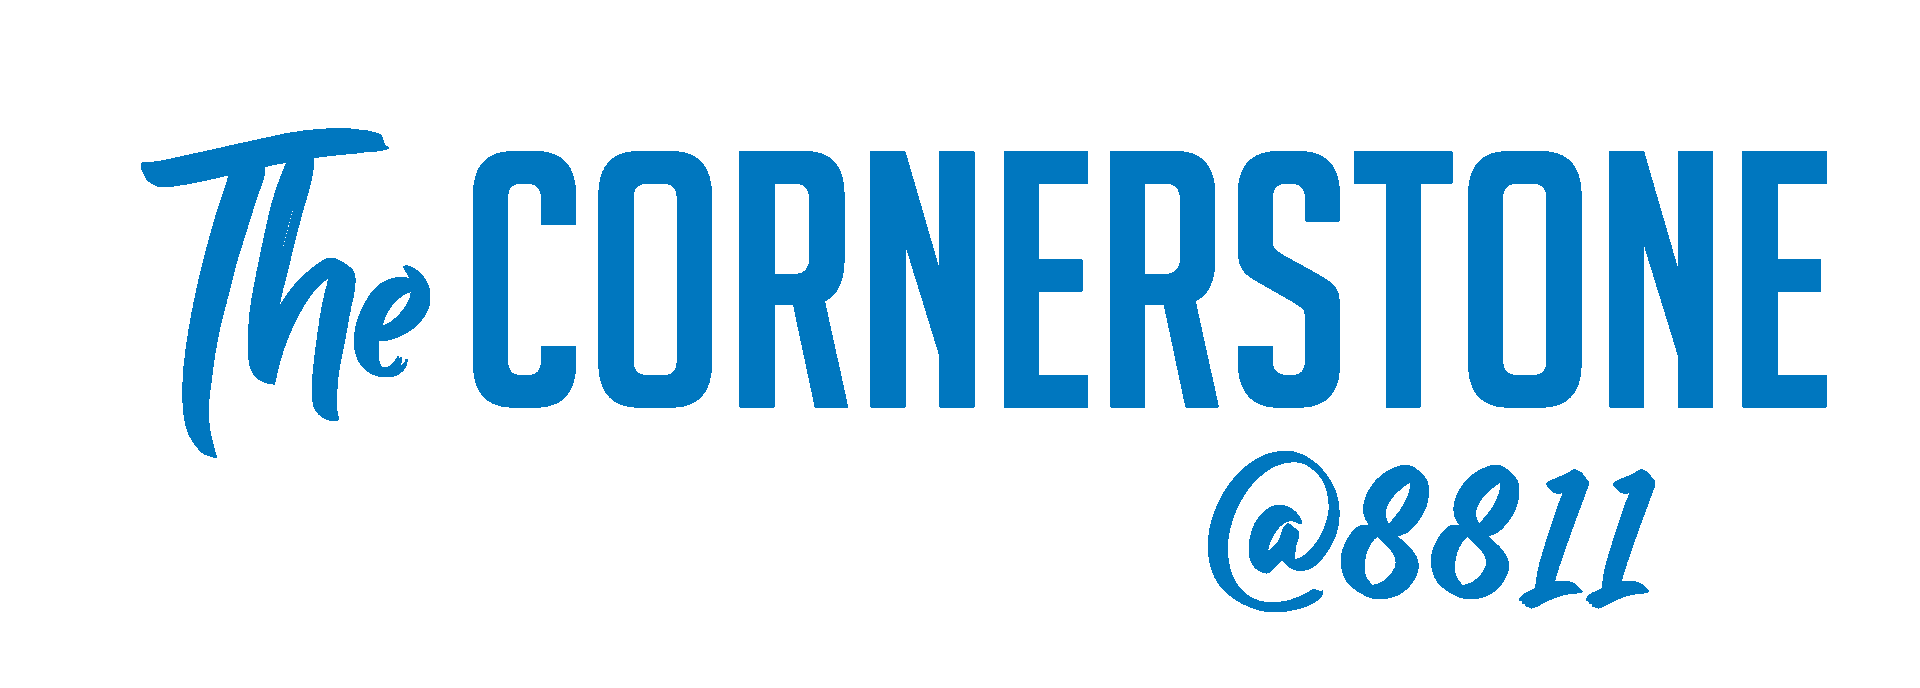 The Cornerstone@8811 logo